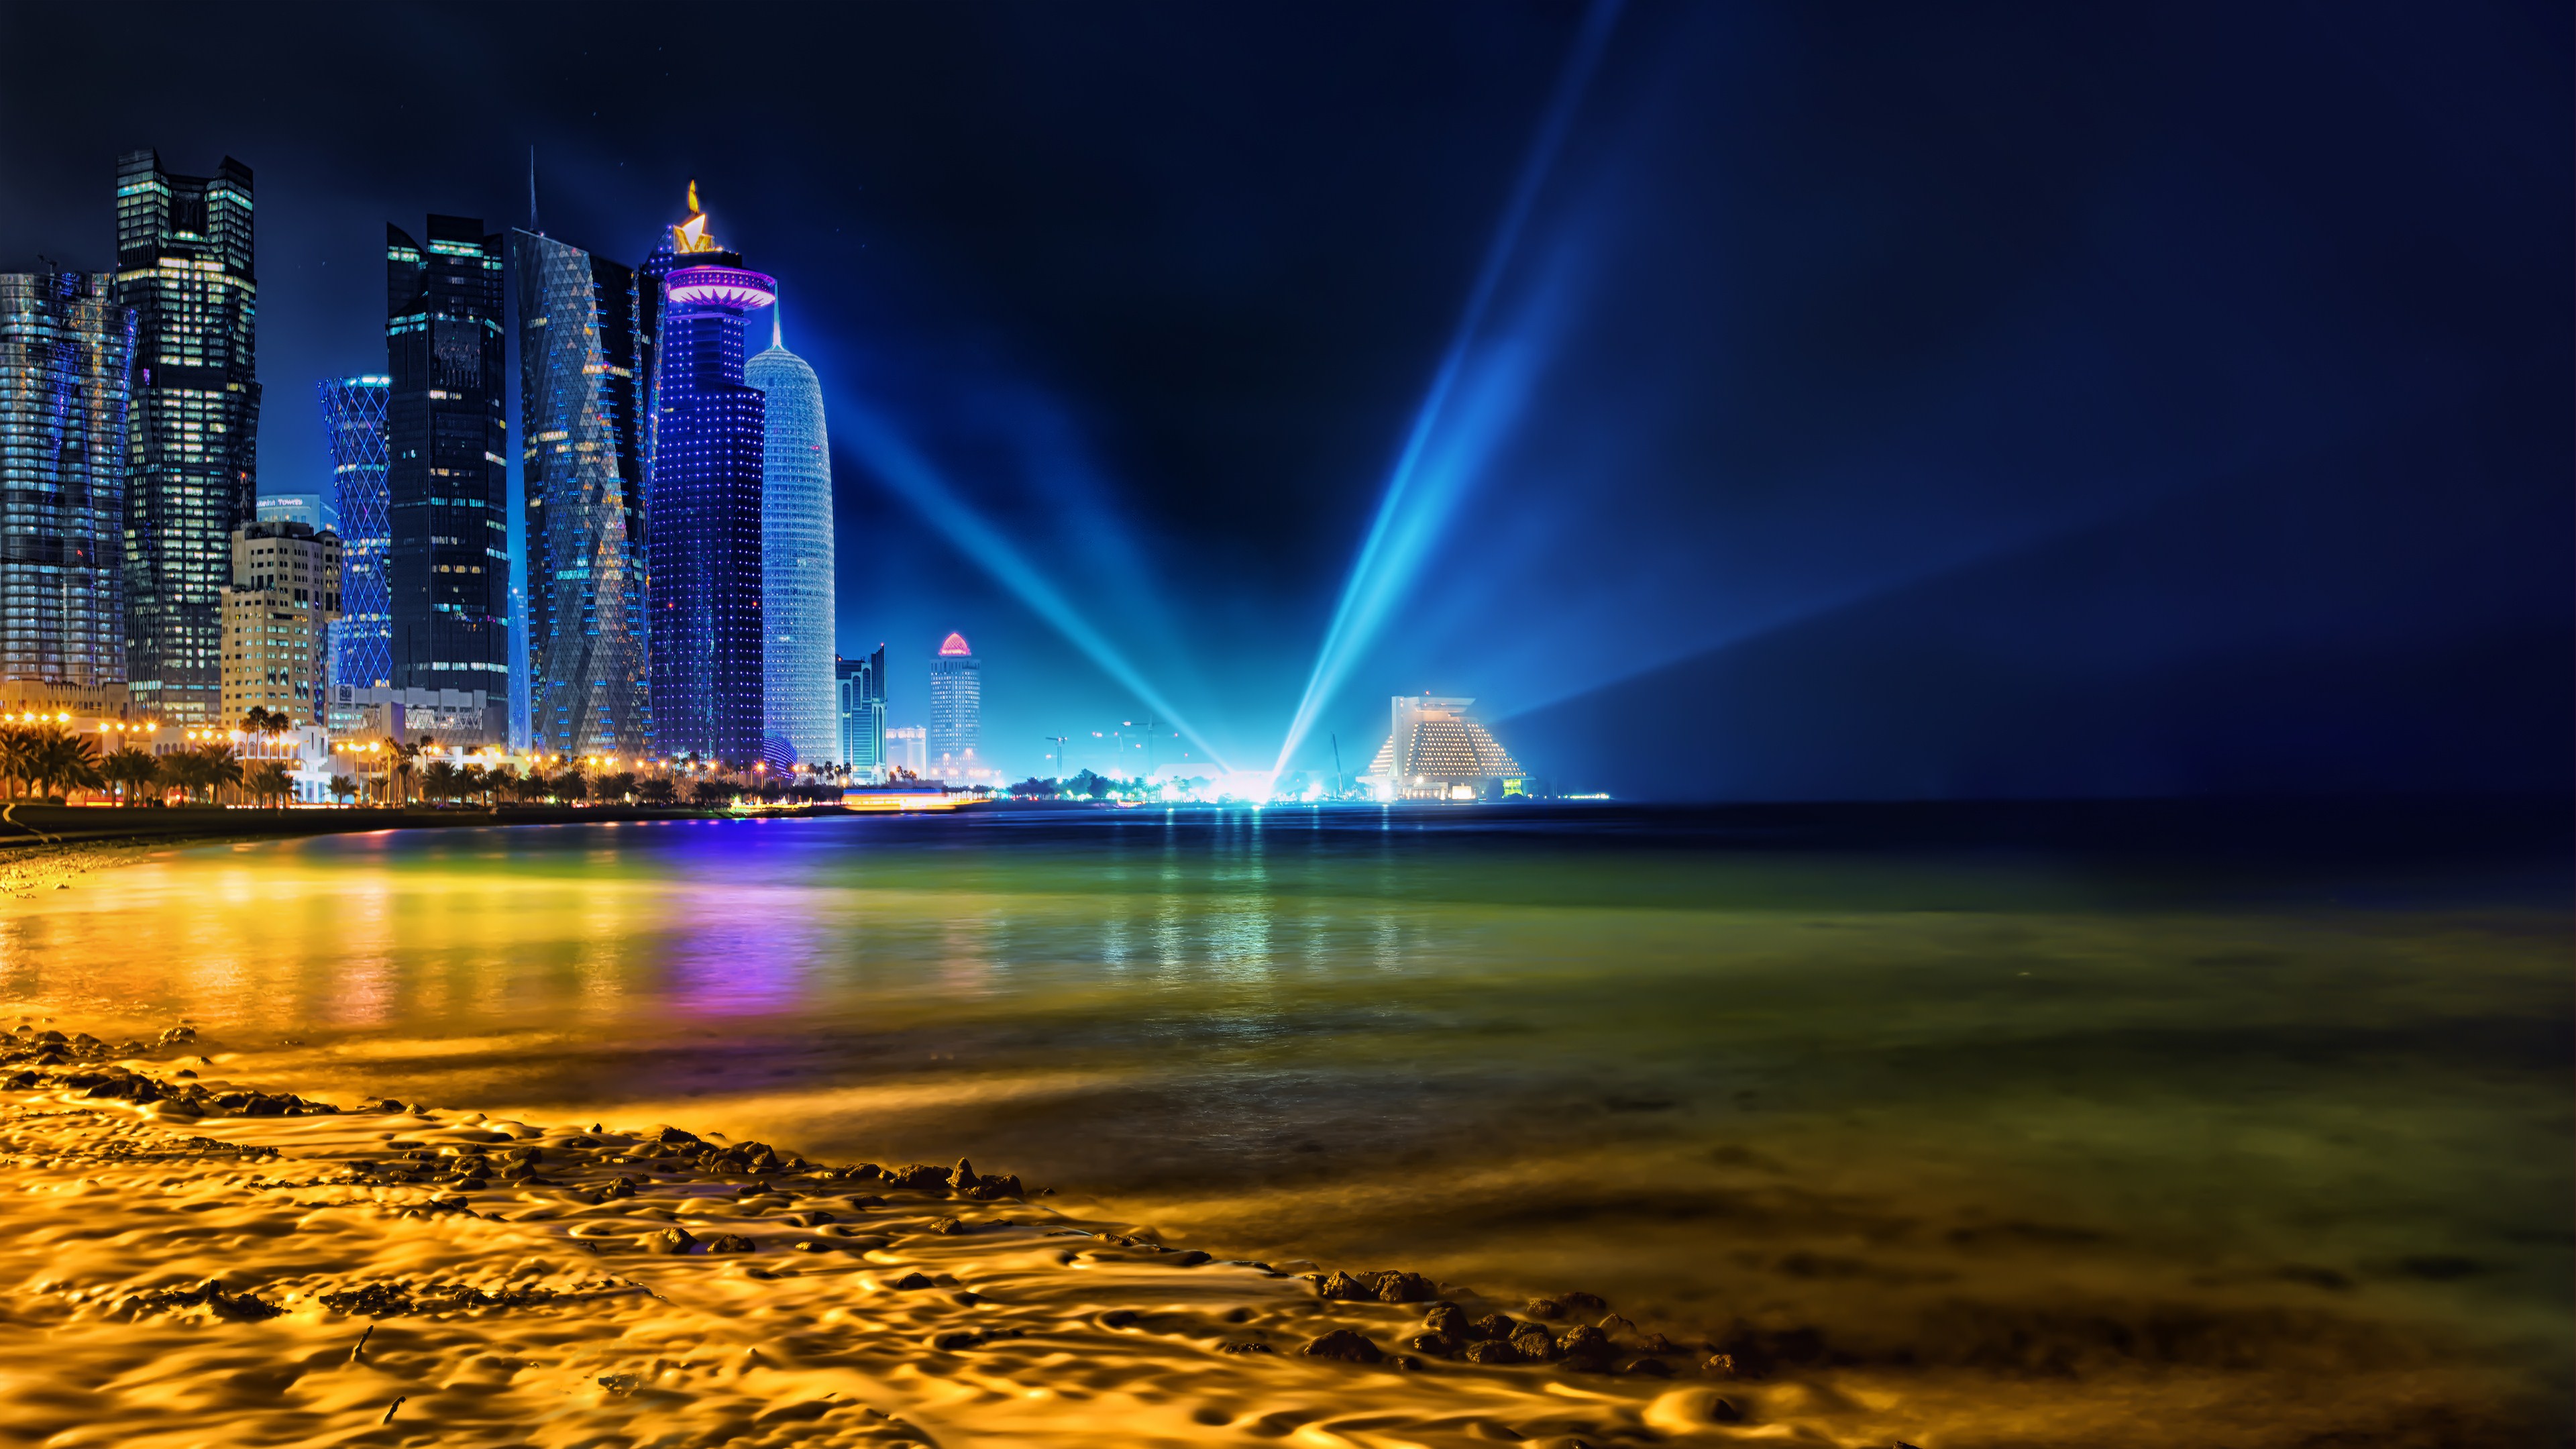 qatar 4k Ultra HD Wallpaper and Background Image | 3840x2160 | ID:485172